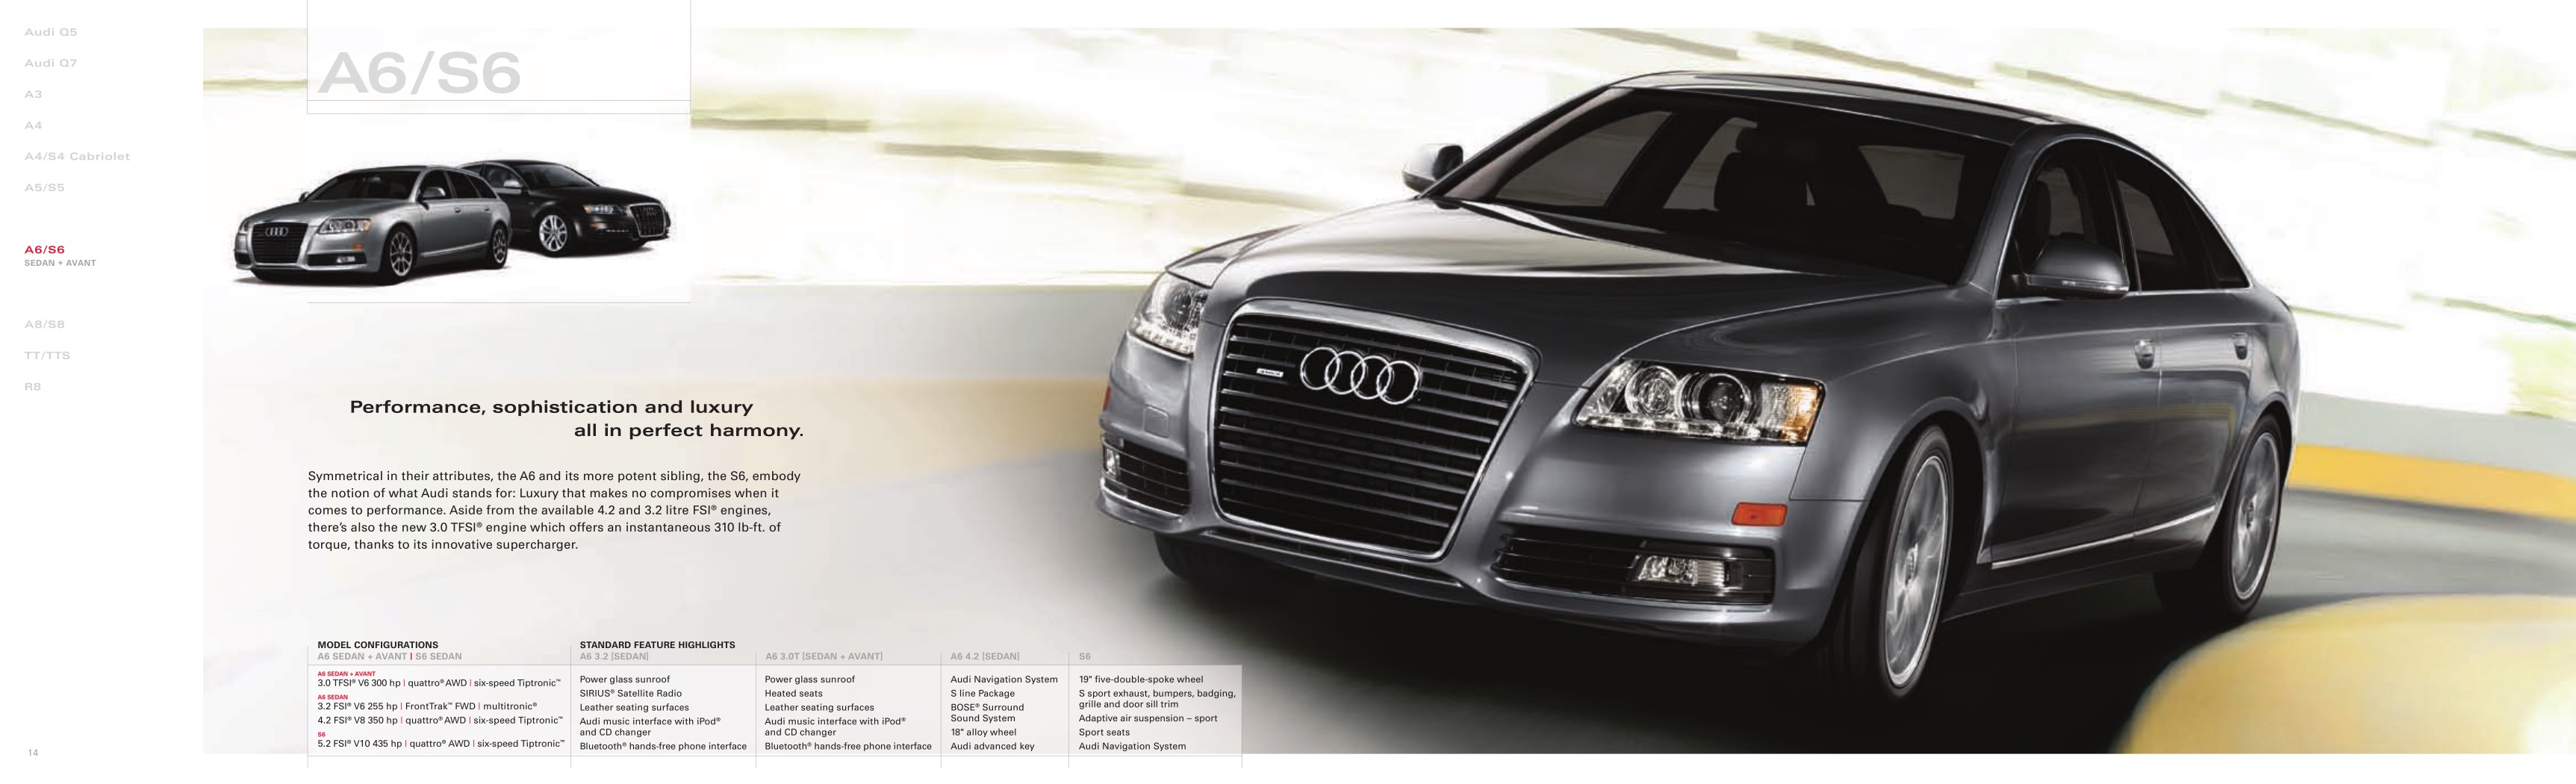 2009 Audi Brochure Page 7